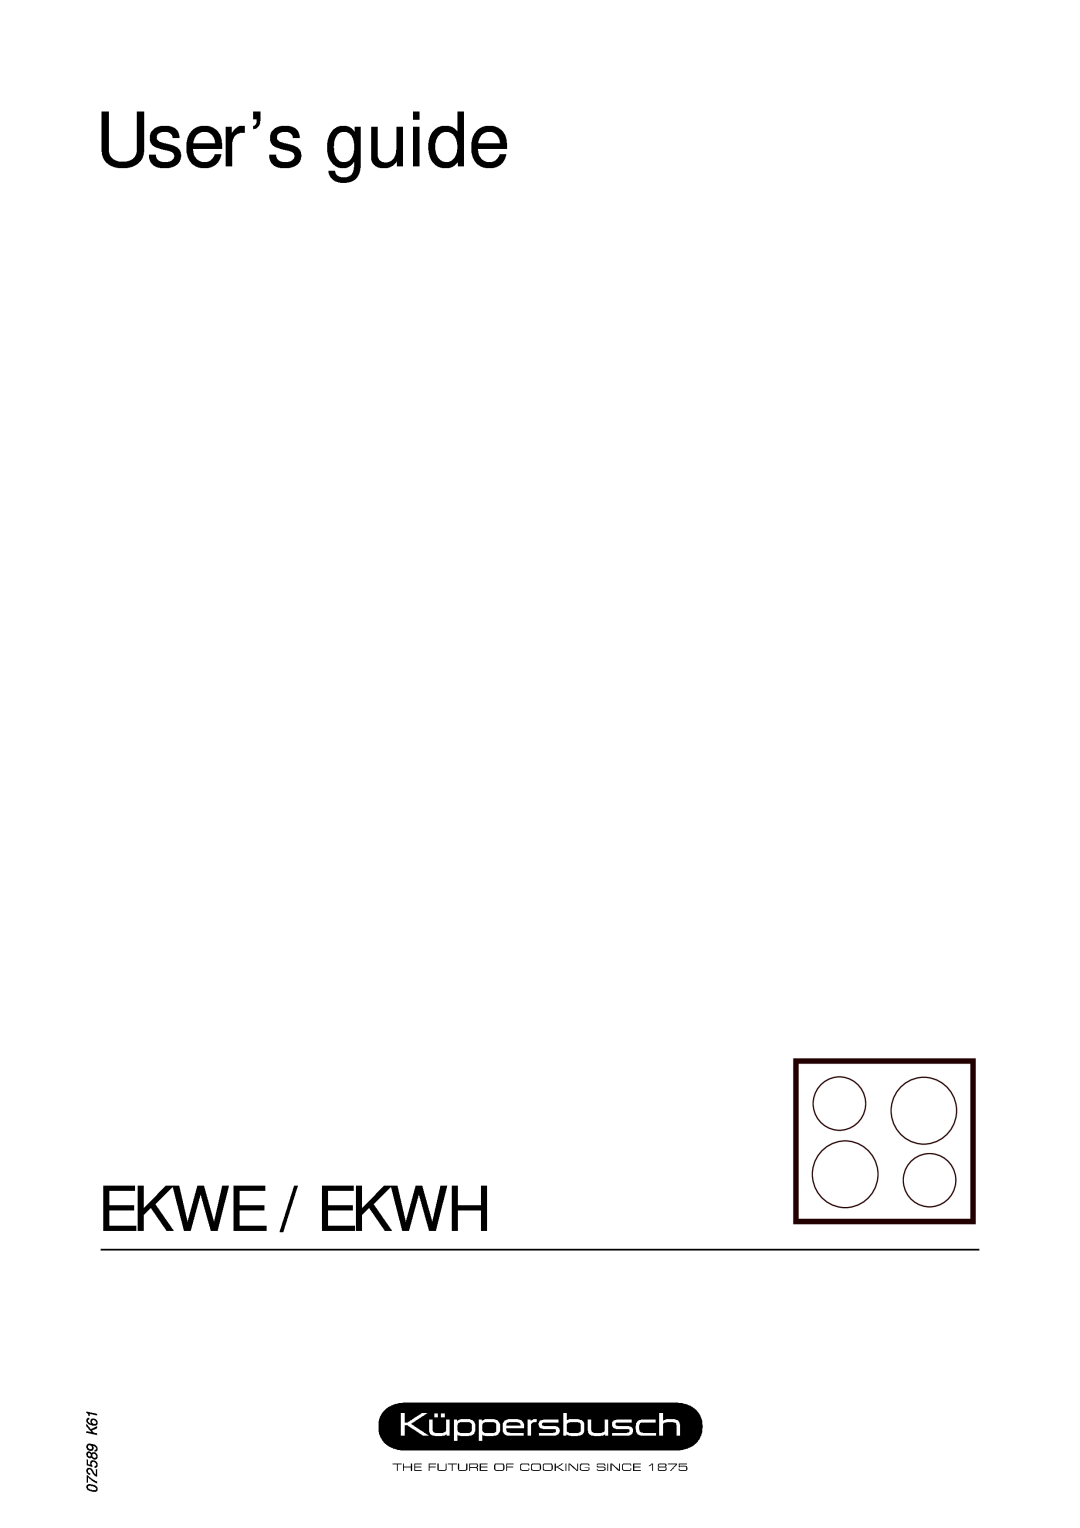 Kuppersbusch USA EKWE, EKWH manual User’s guide, Ekwe / Ekwh, 072589 K61 